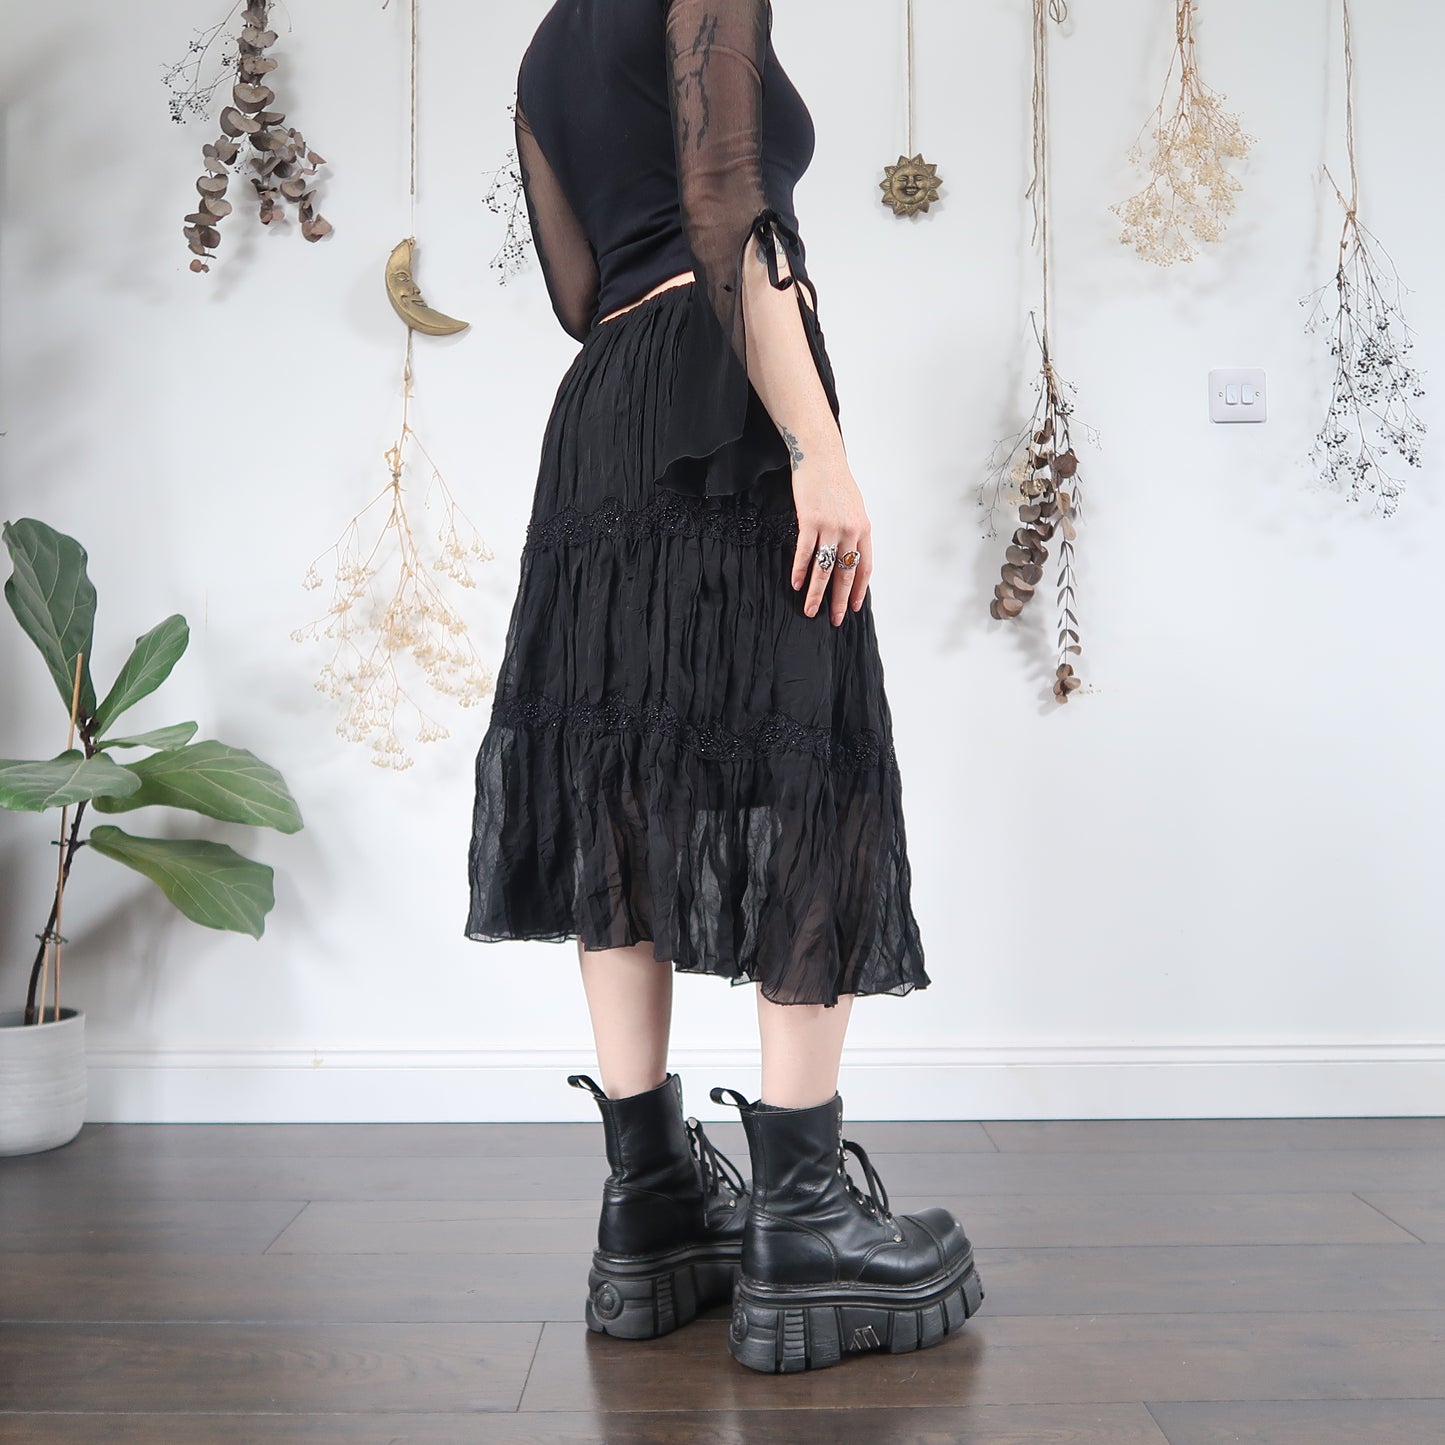 Black skirt - size M/L